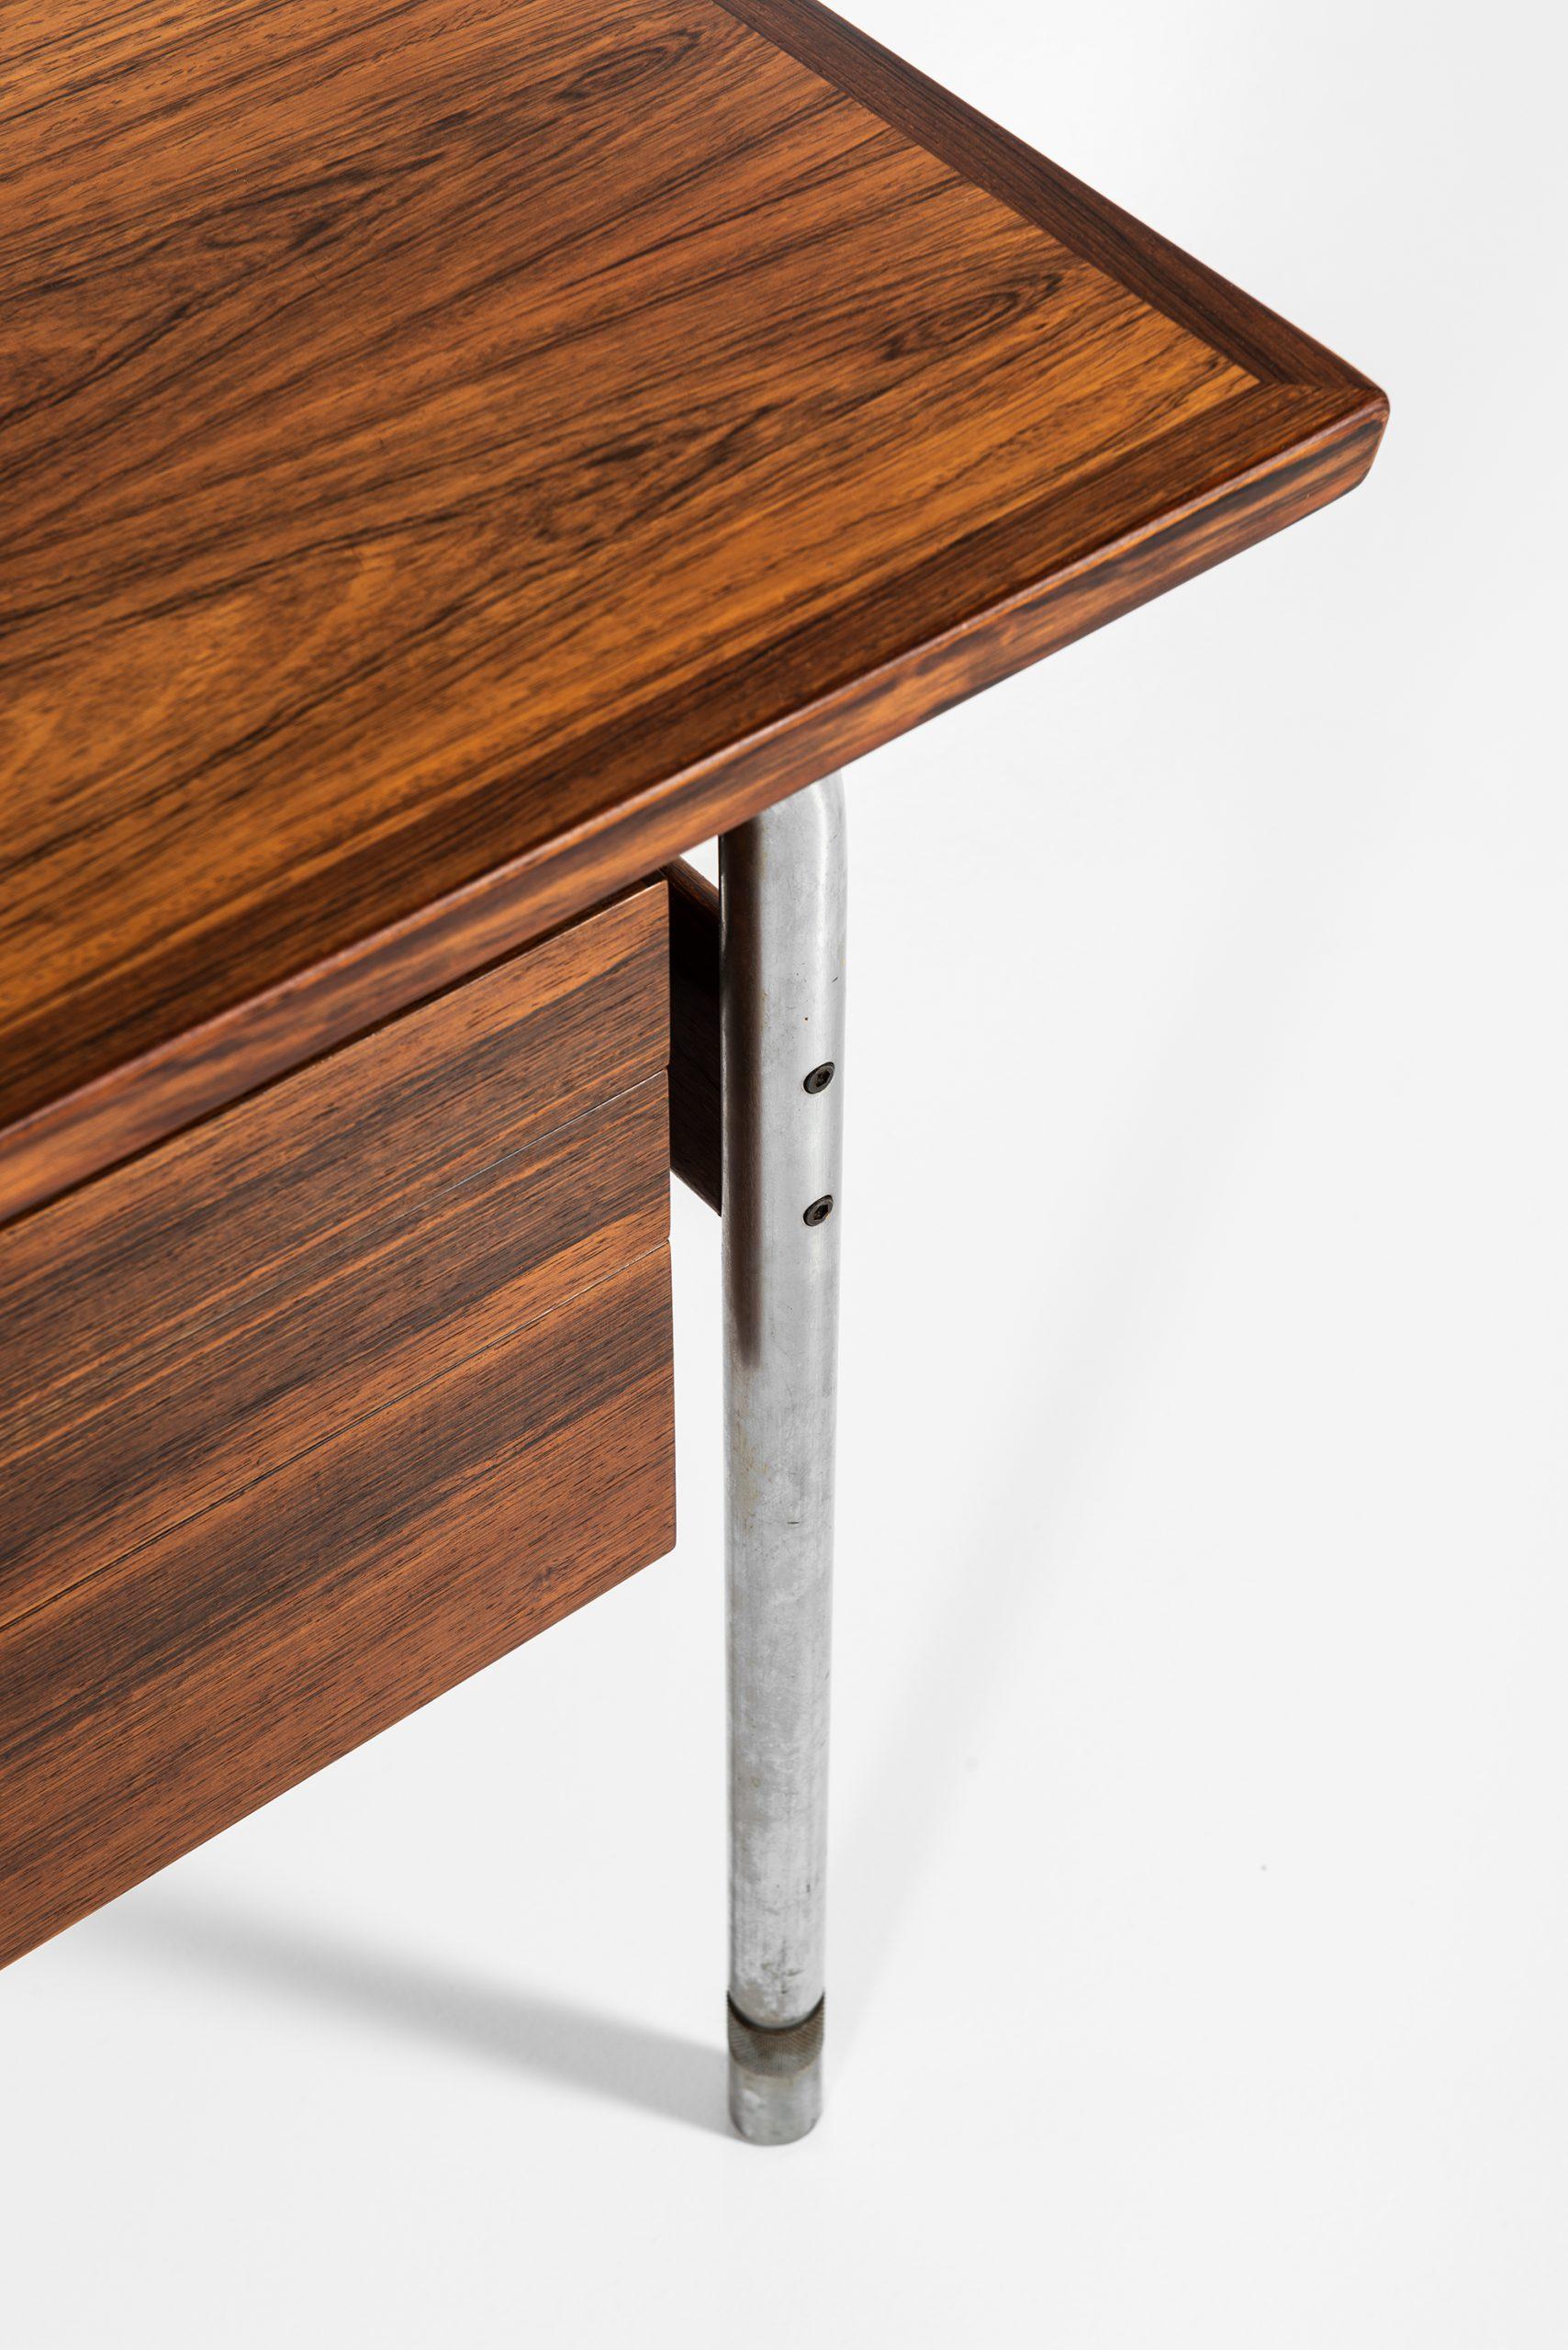 Scandinavian Modern Arne Vodder Desk Produced by Sibast Møbelfabrik in Denmark For Sale